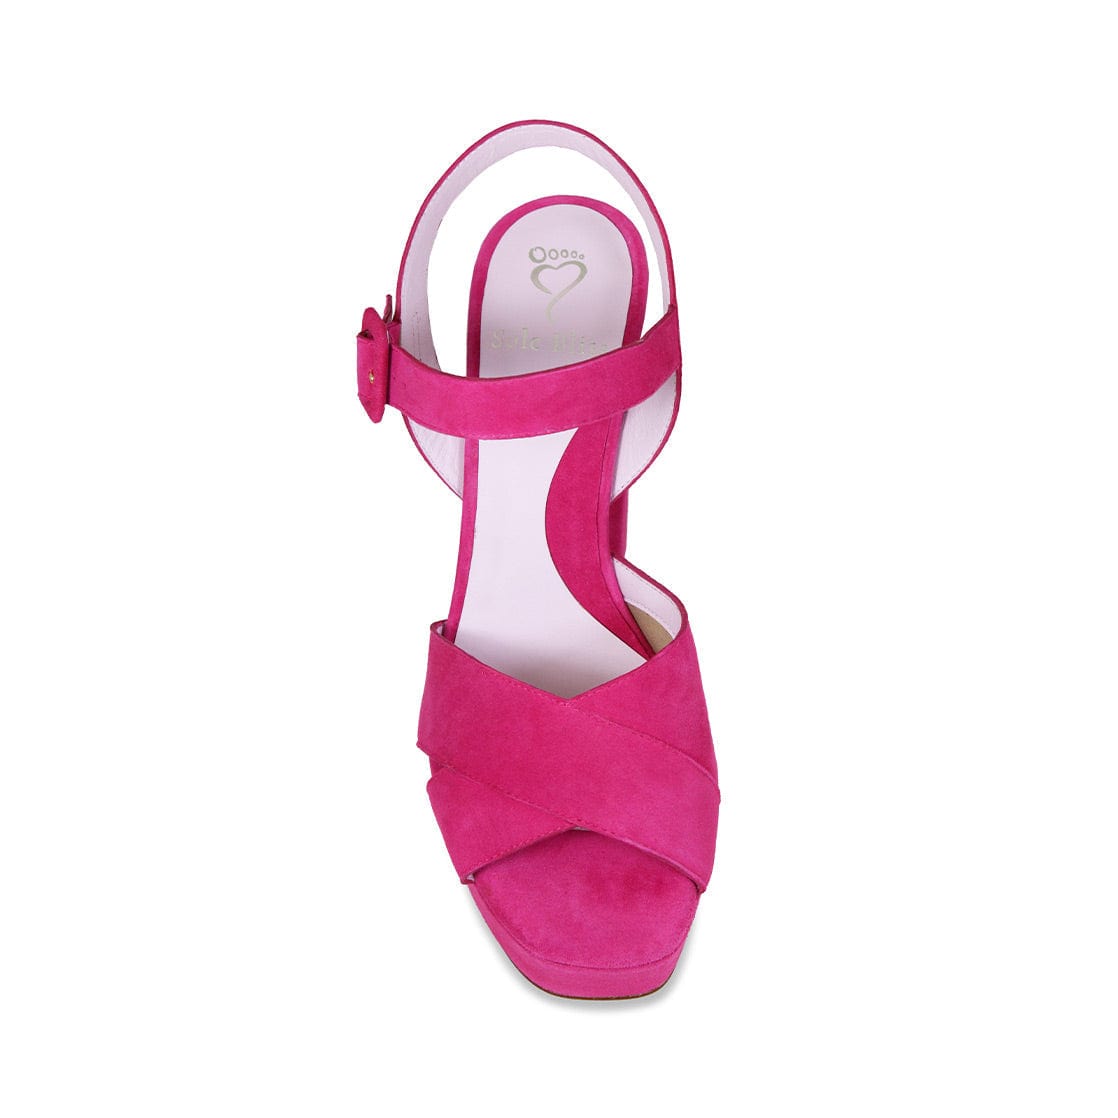 Pink Heels for sale in Haz-Zabbar, Malta | Facebook Marketplace | Facebook